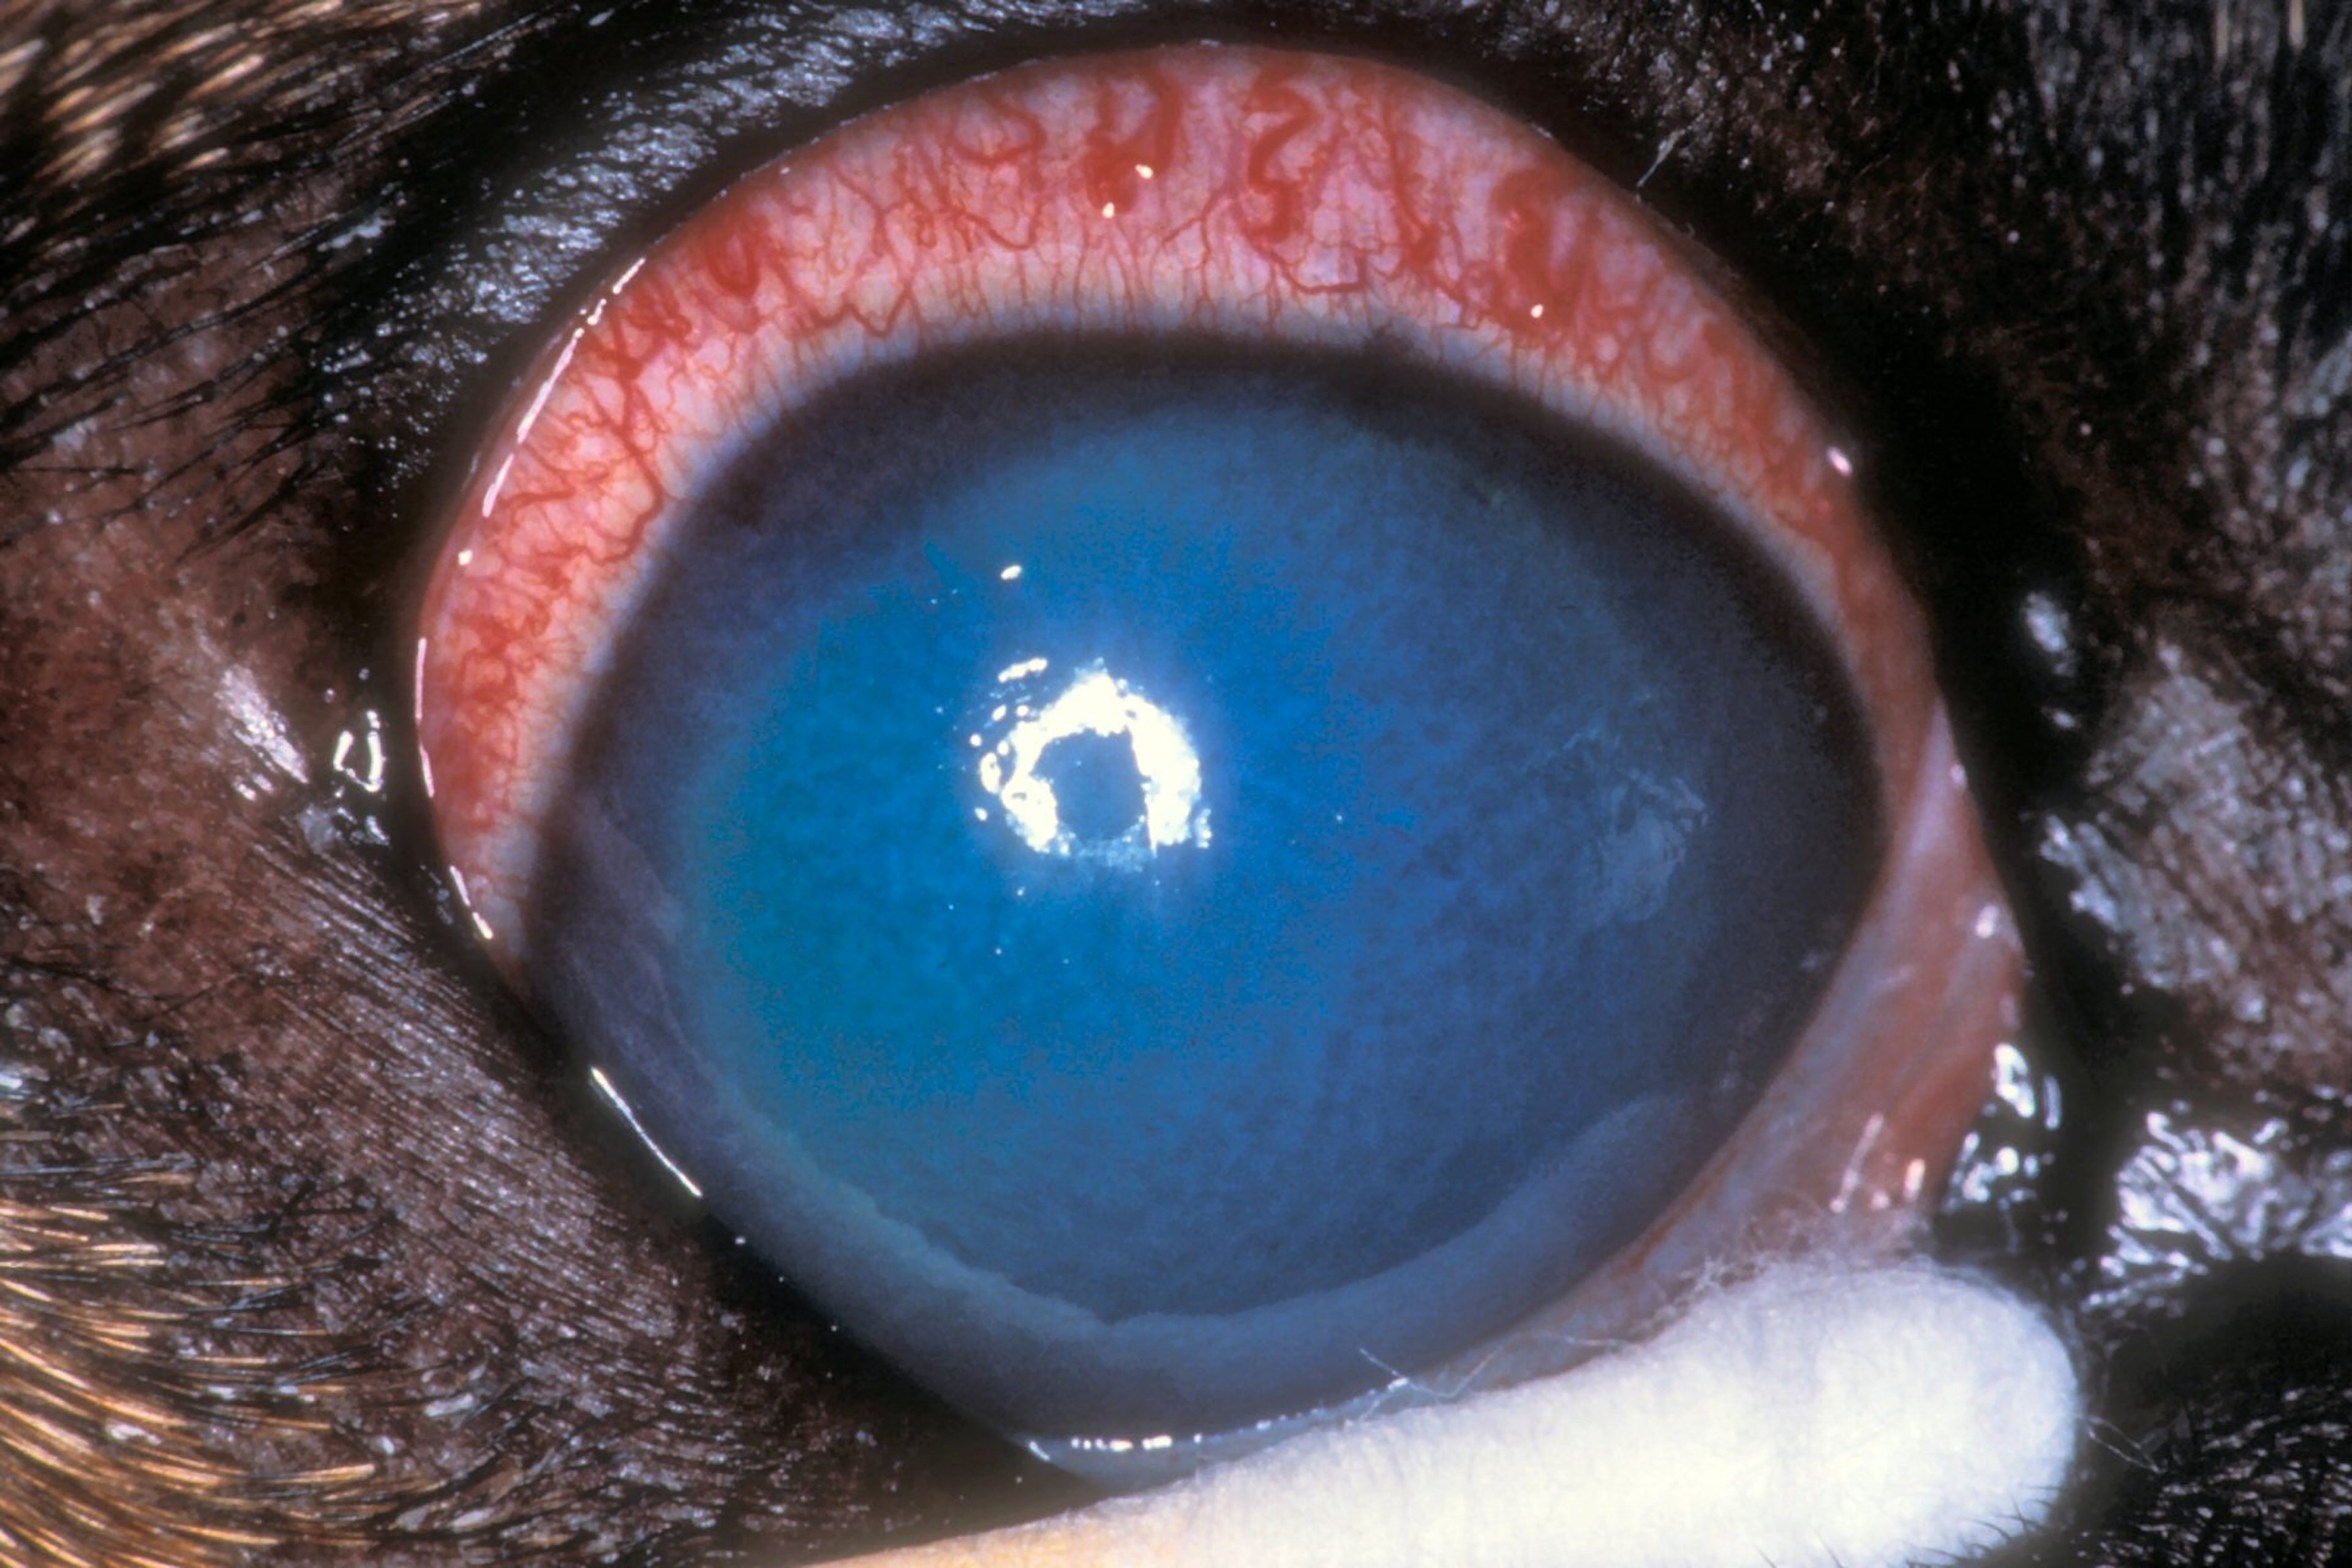 Primary glaucoma, dog